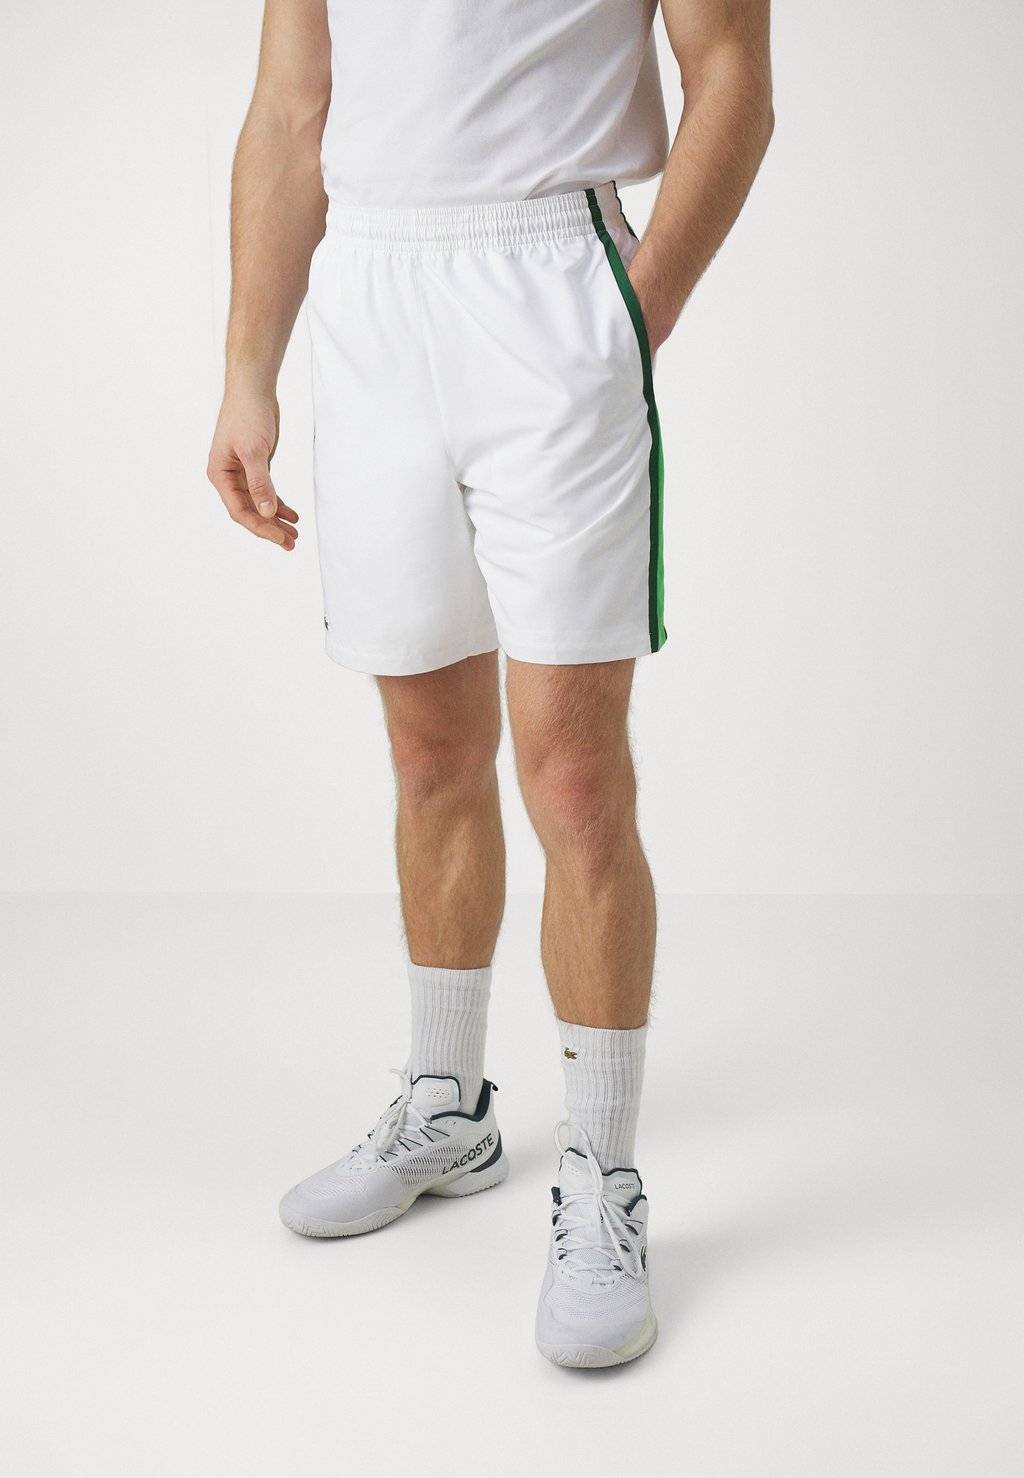 Спортивные шорты Sports Shorts Lacoste, цвет blanc/vert спортивные шорты sports shorts lacoste цвет navy blue